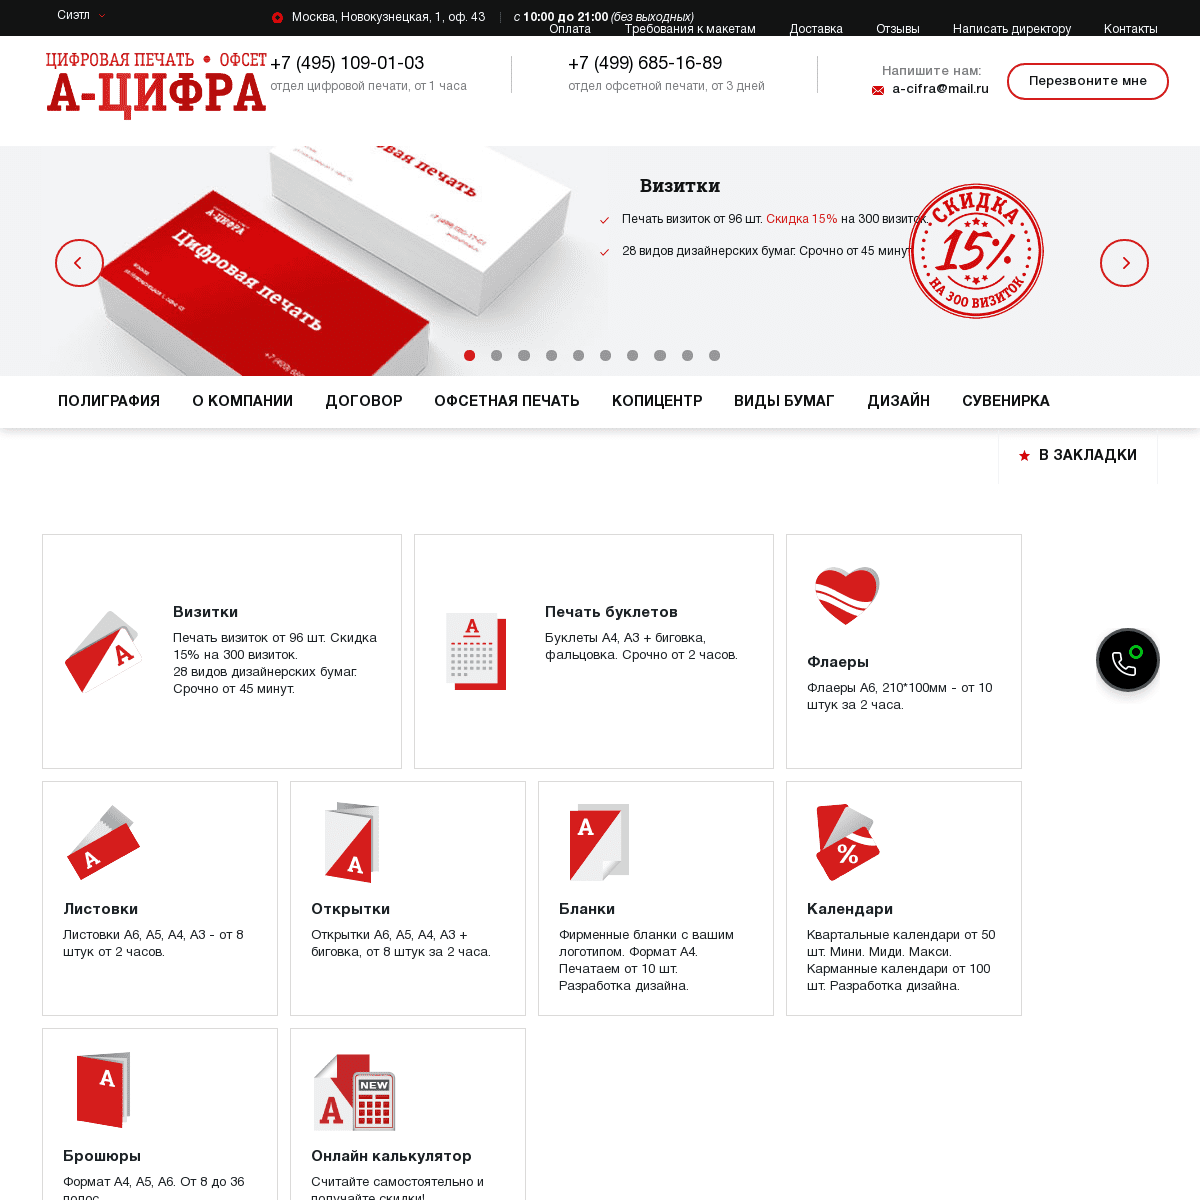 A complete backup of https://a-cifra.ru